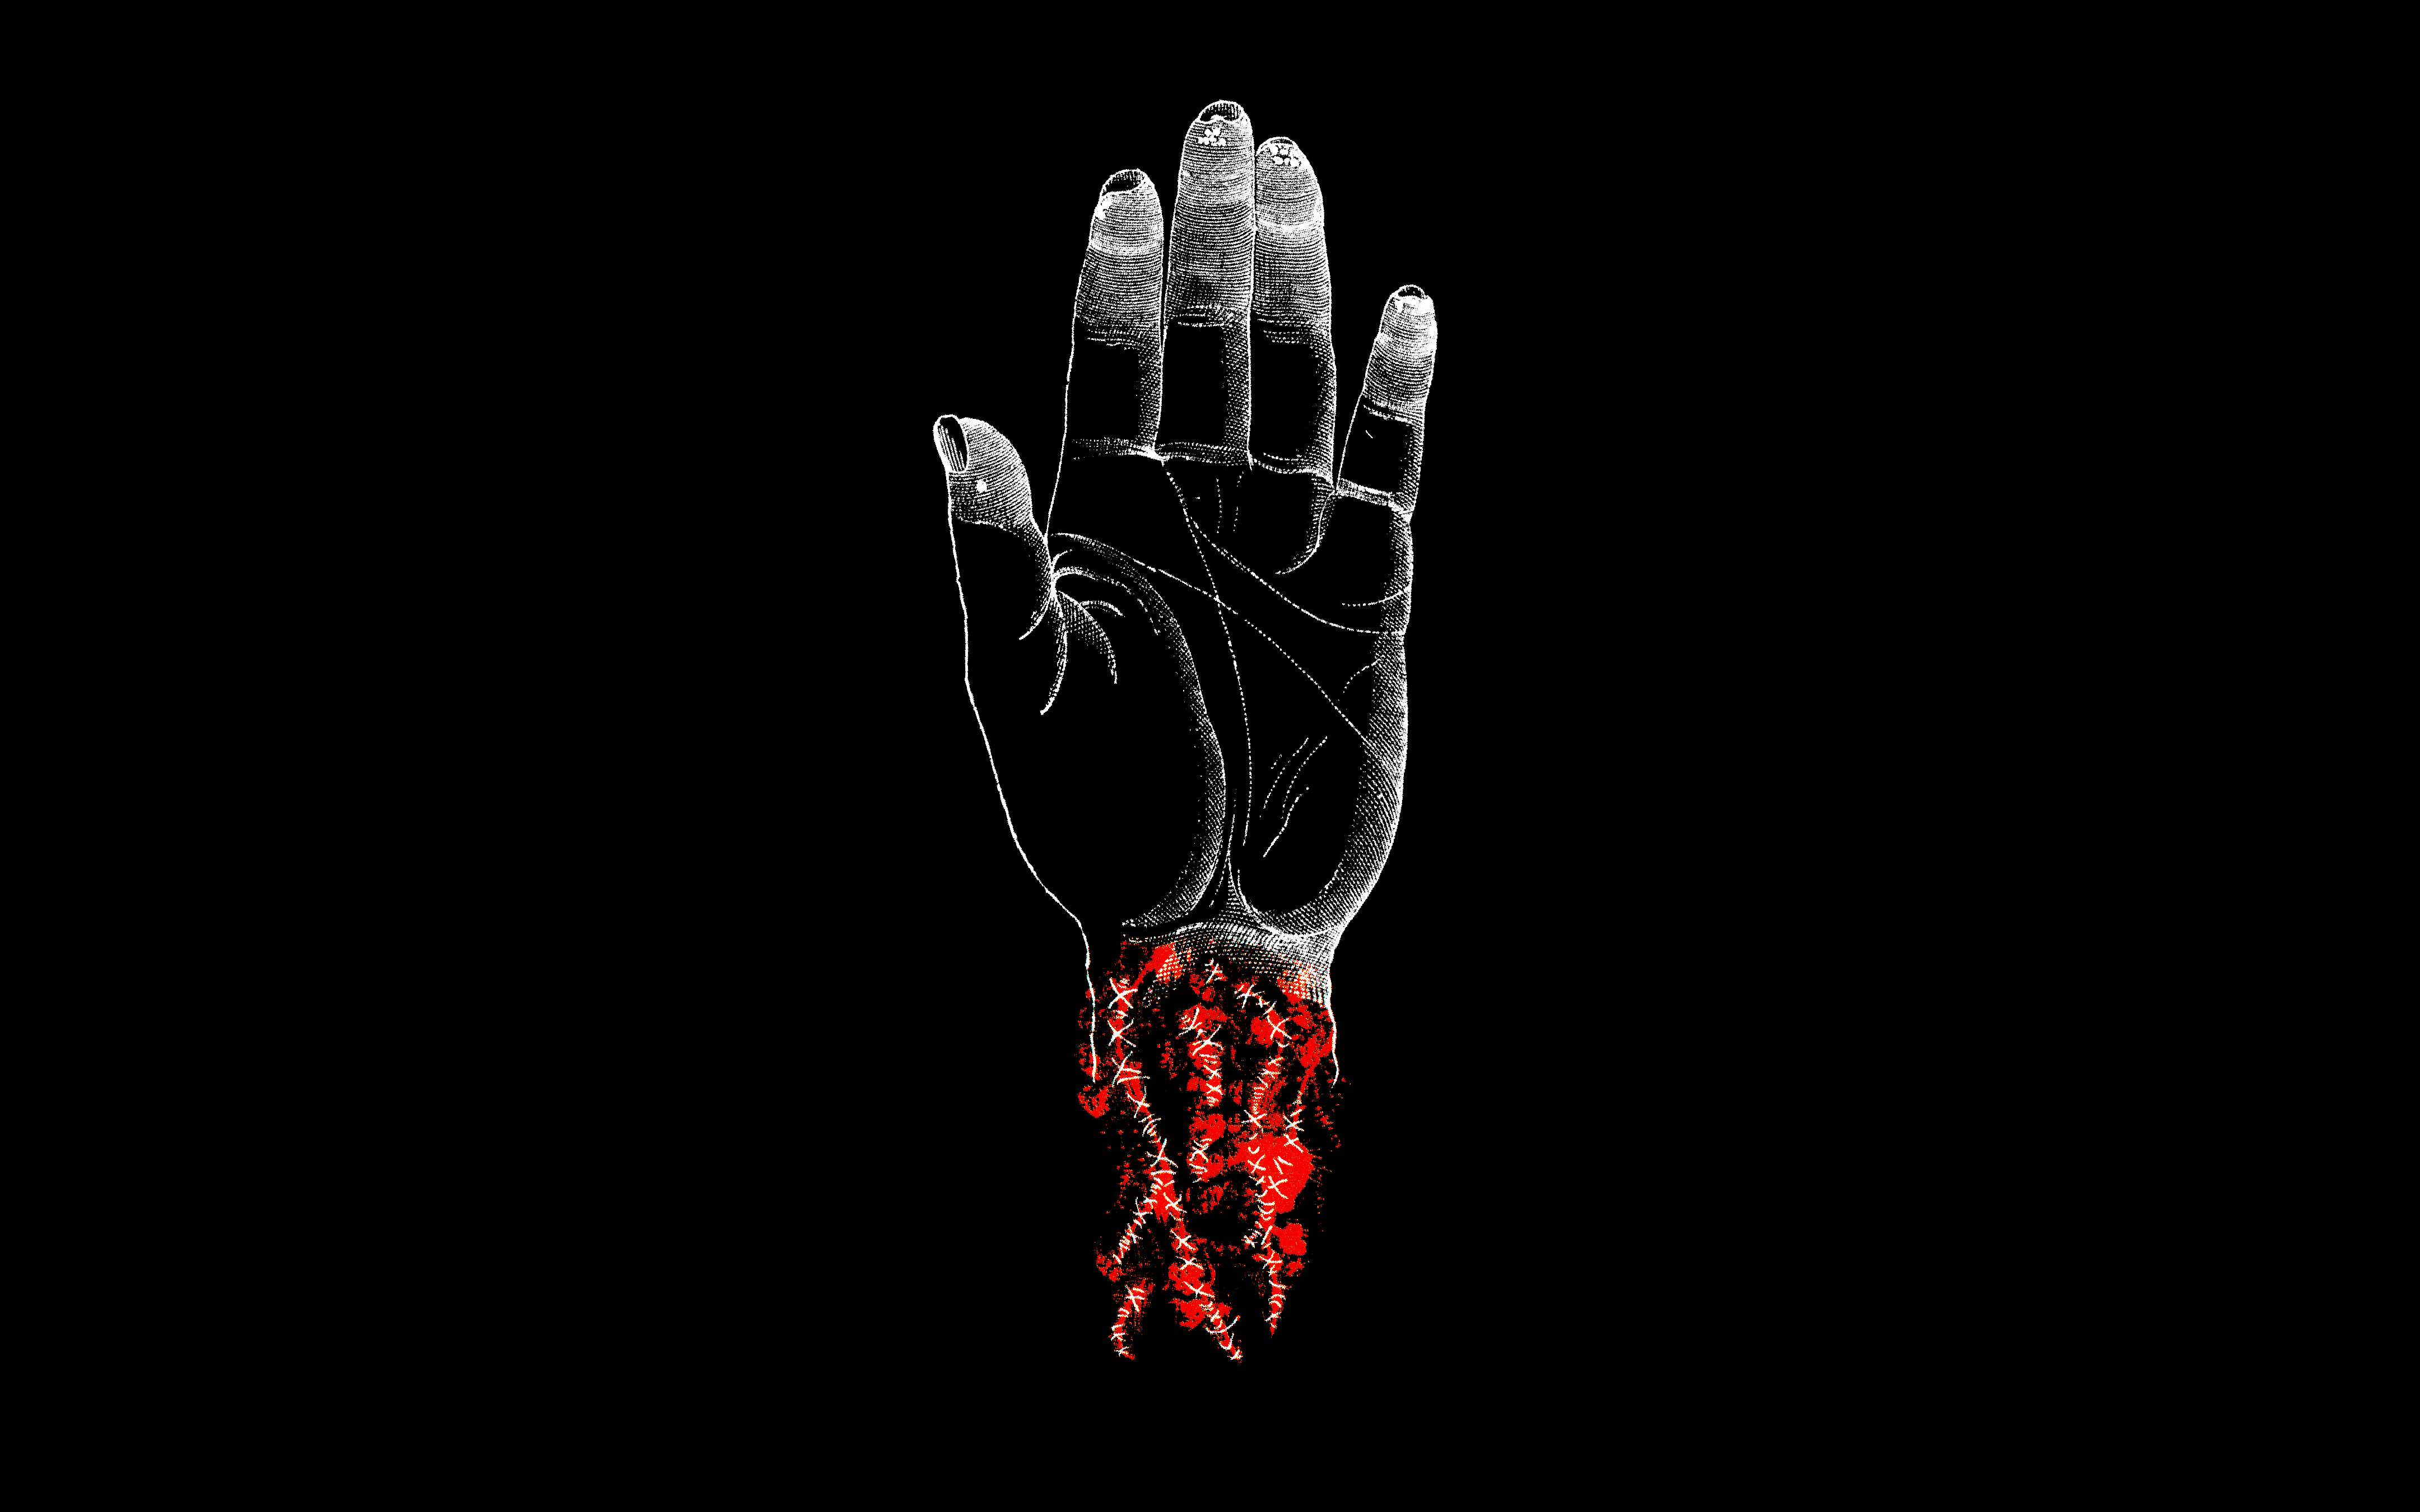 Music Black Hardcore Punk Hardcore Metalcore Cover Art Album Covers Hands Veins Red 4320x2700